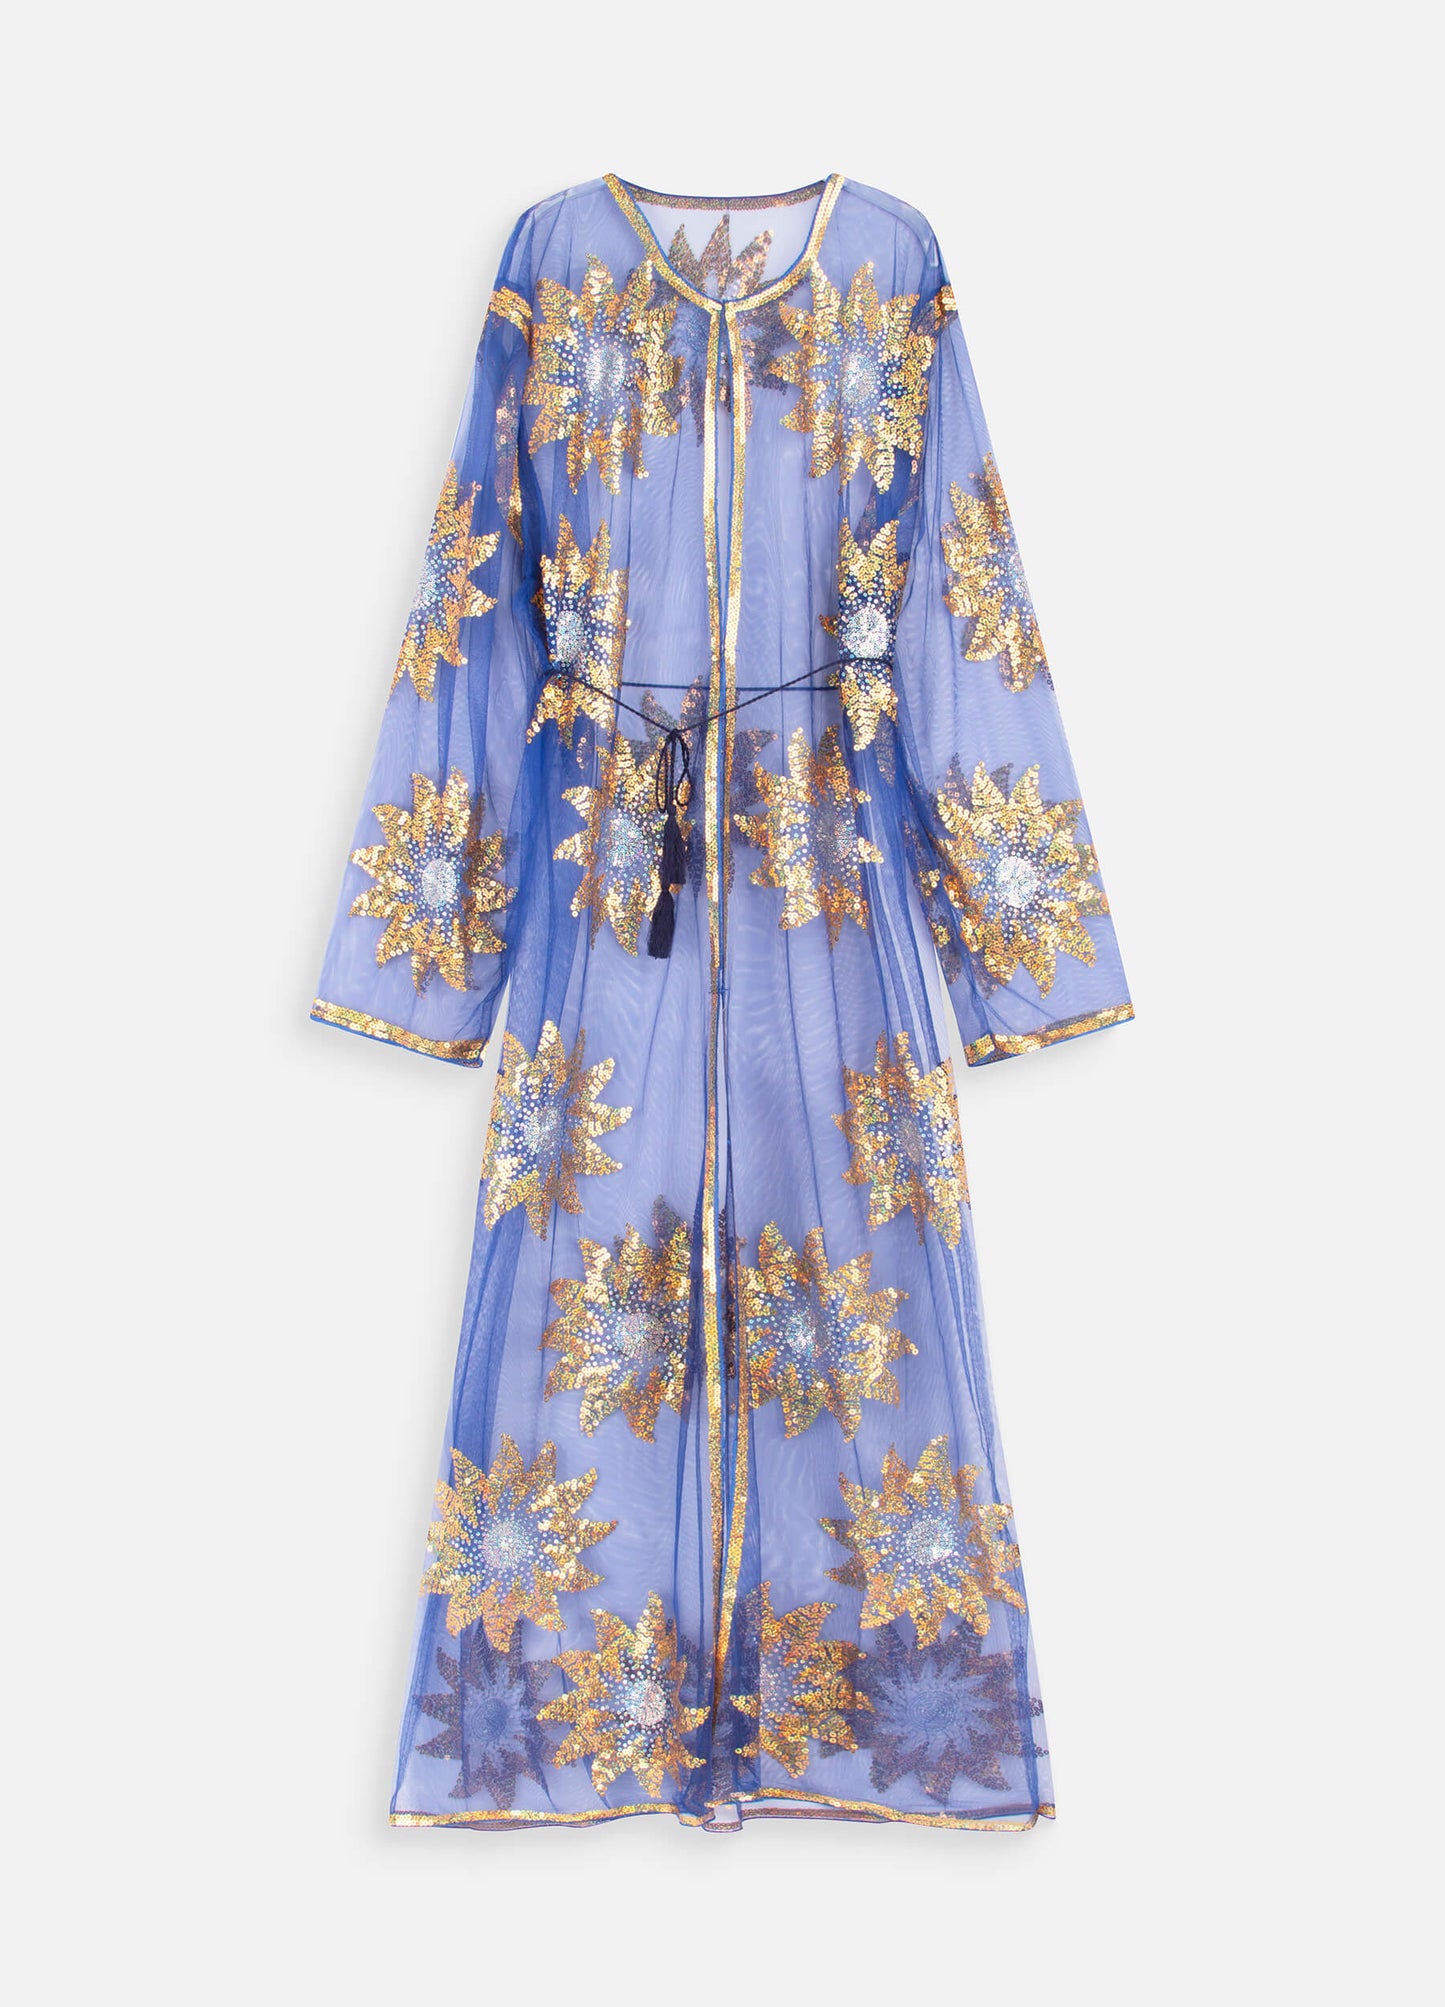 MECALA Women's Floral Sequin Maxi Mesh Kimono Cardigan Plus Size Blue Sheer Cardigan Kftan with Drawstring